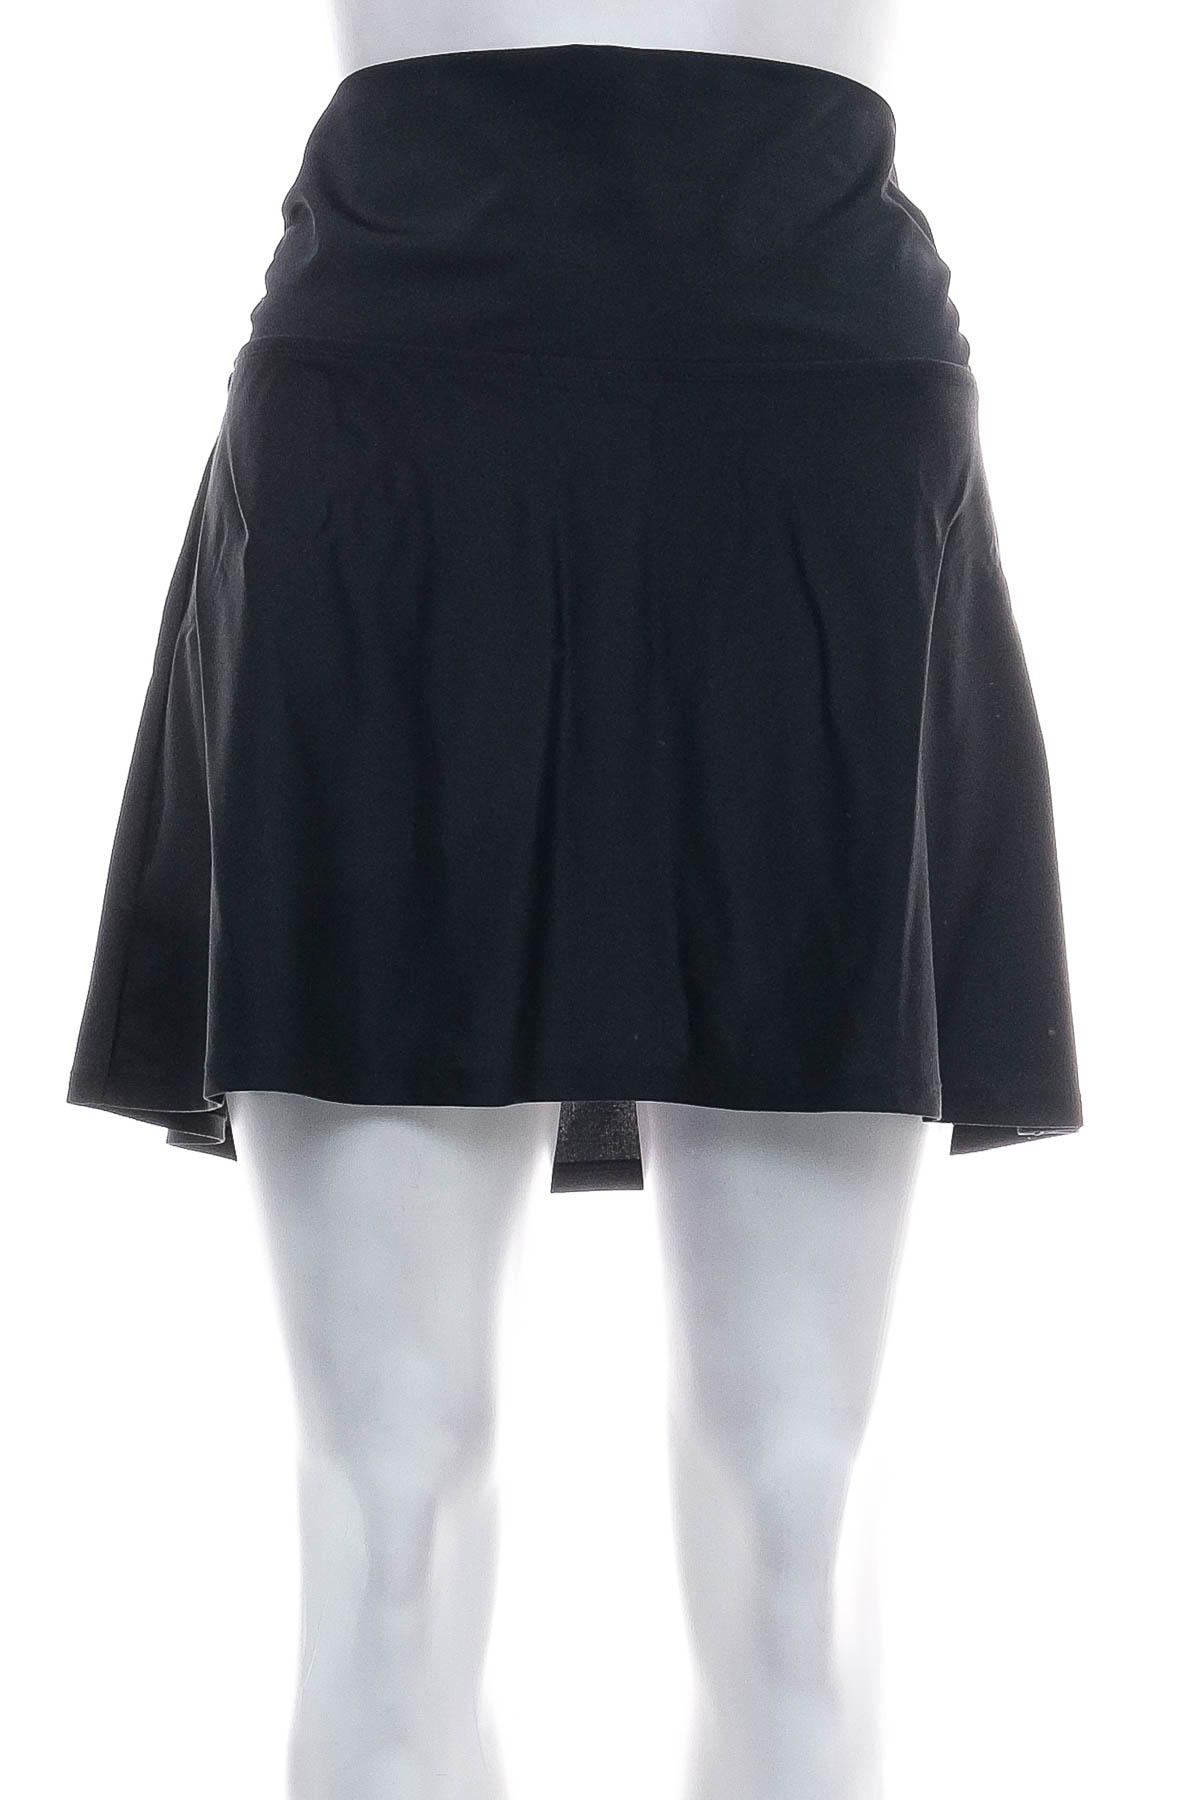 Skirt - pants - Bpc selection bonprix collection - 0